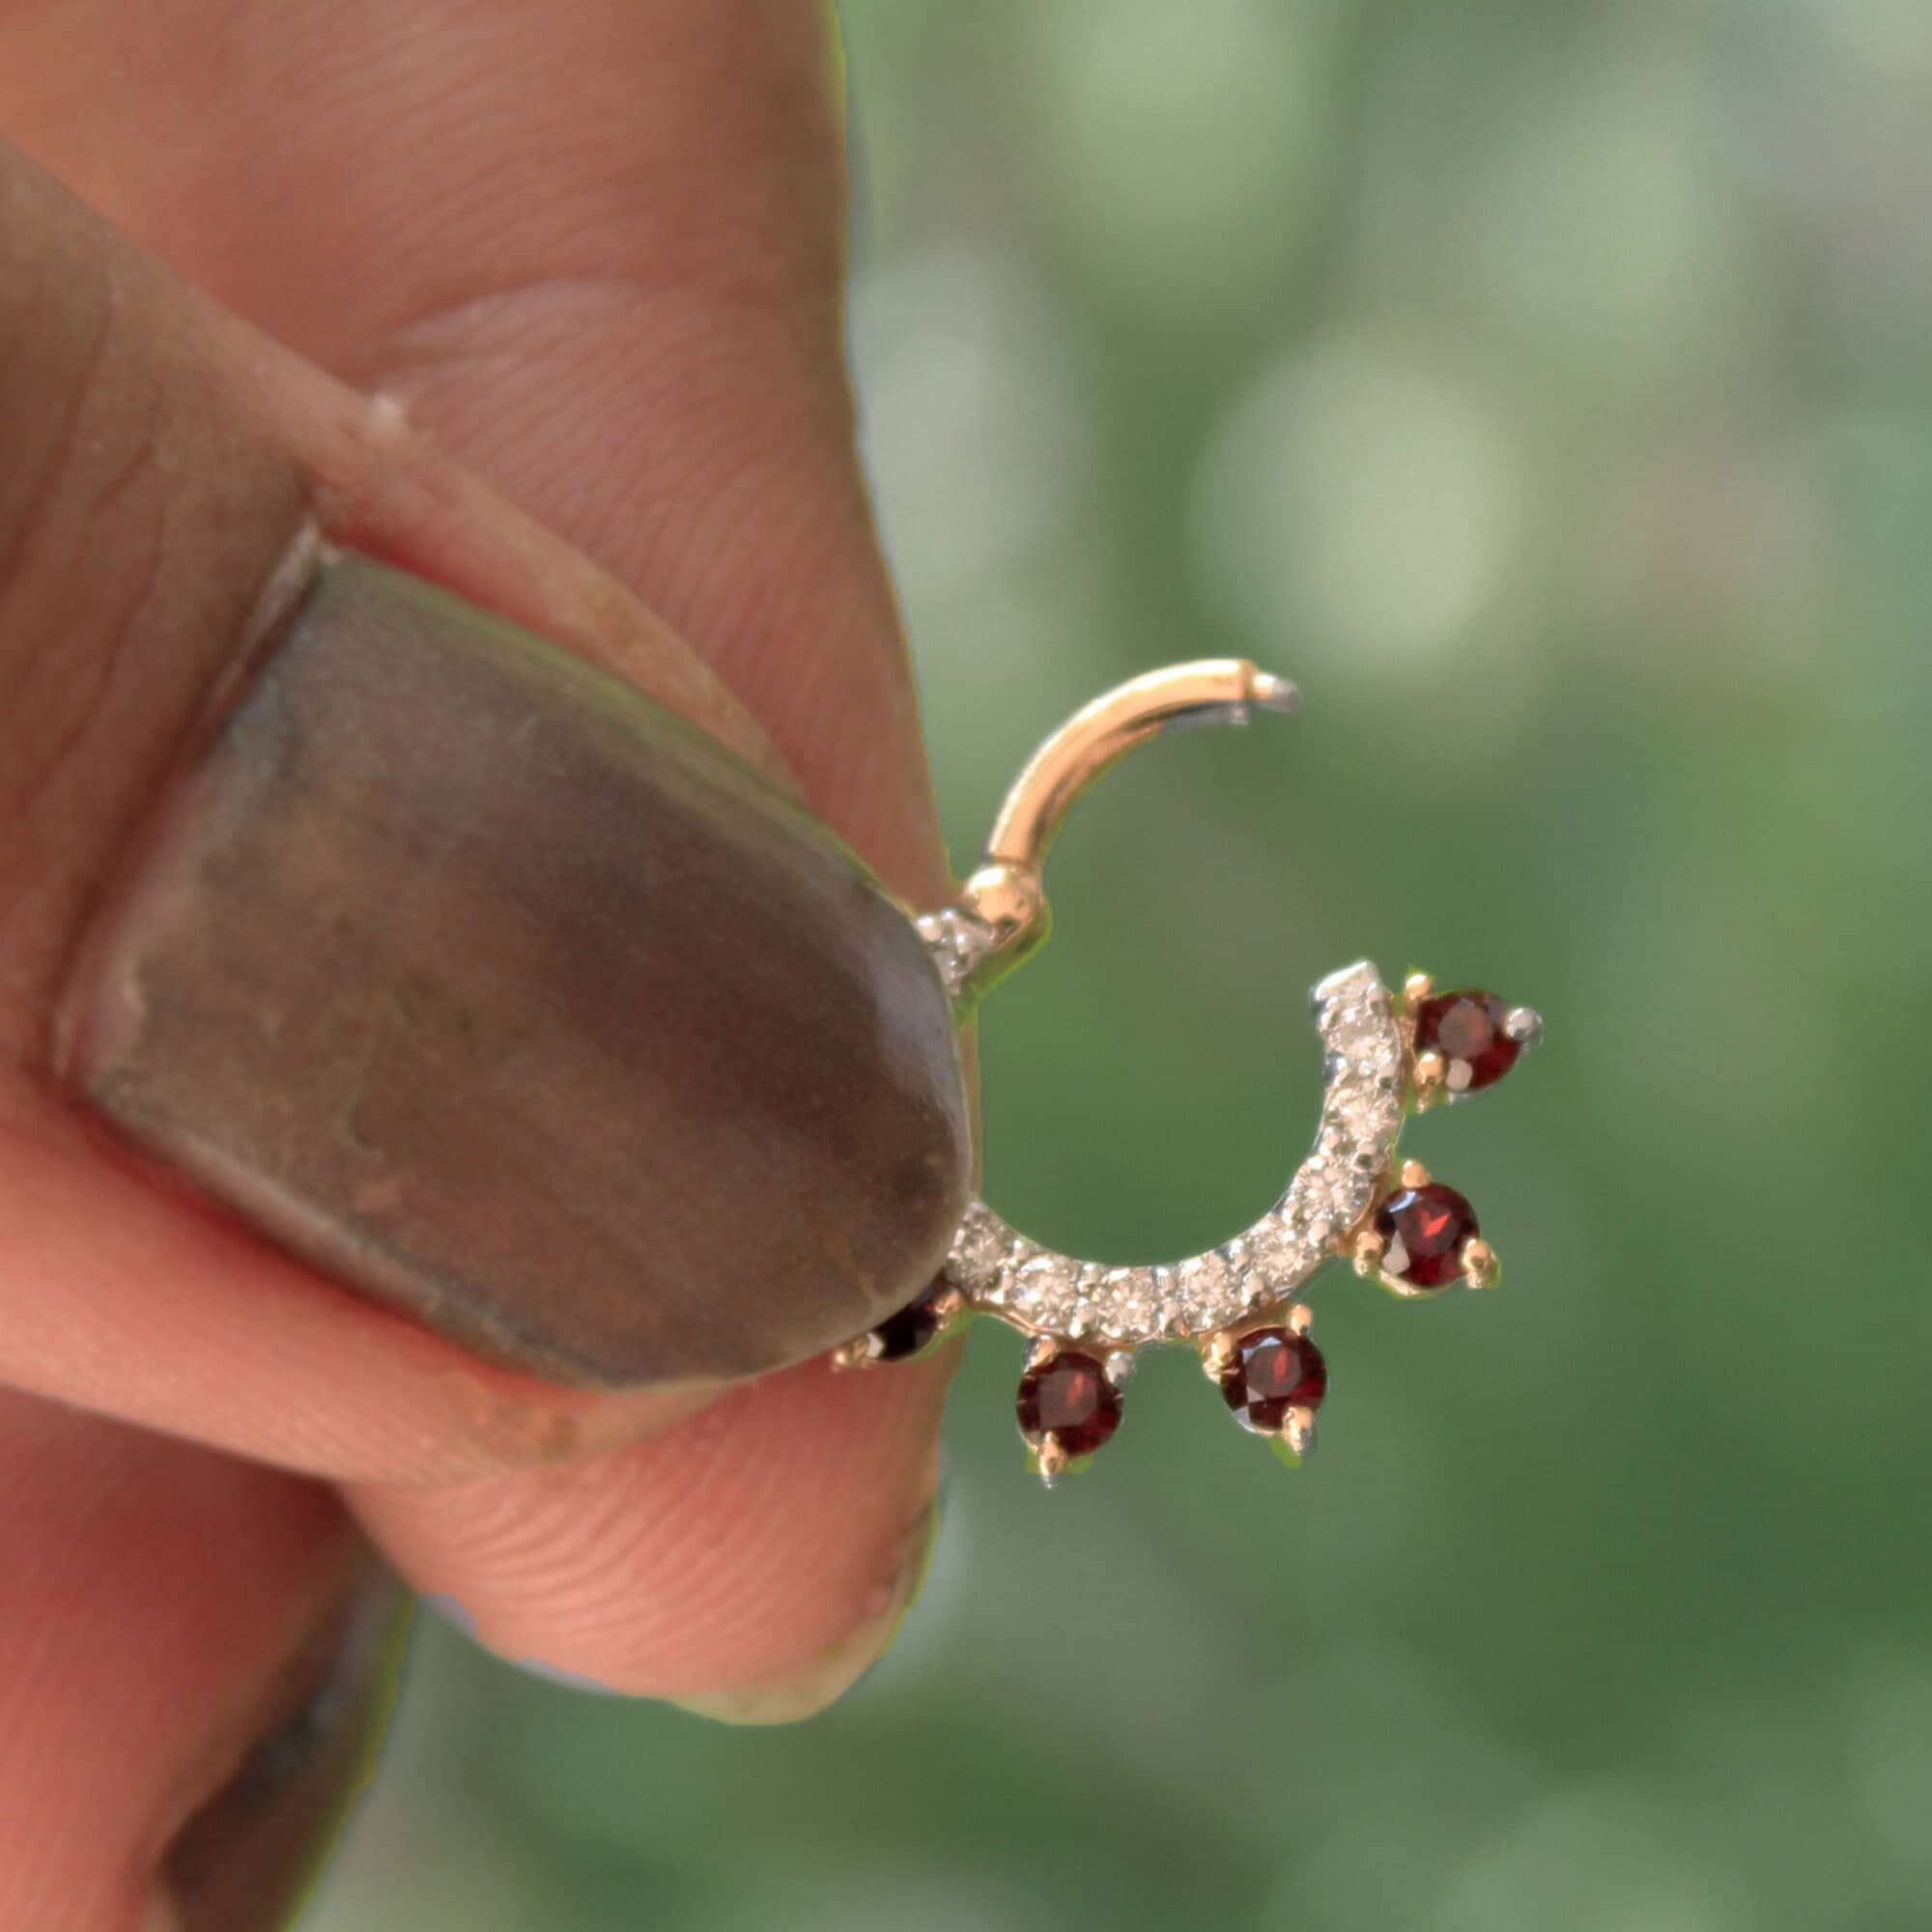 6mm-12mm Diamond & Garnet Daith Septum Hinged Clicker, 14k 18k Solid Gold Natural Gemstone Piercing Jewelry, 14g 16g 18g